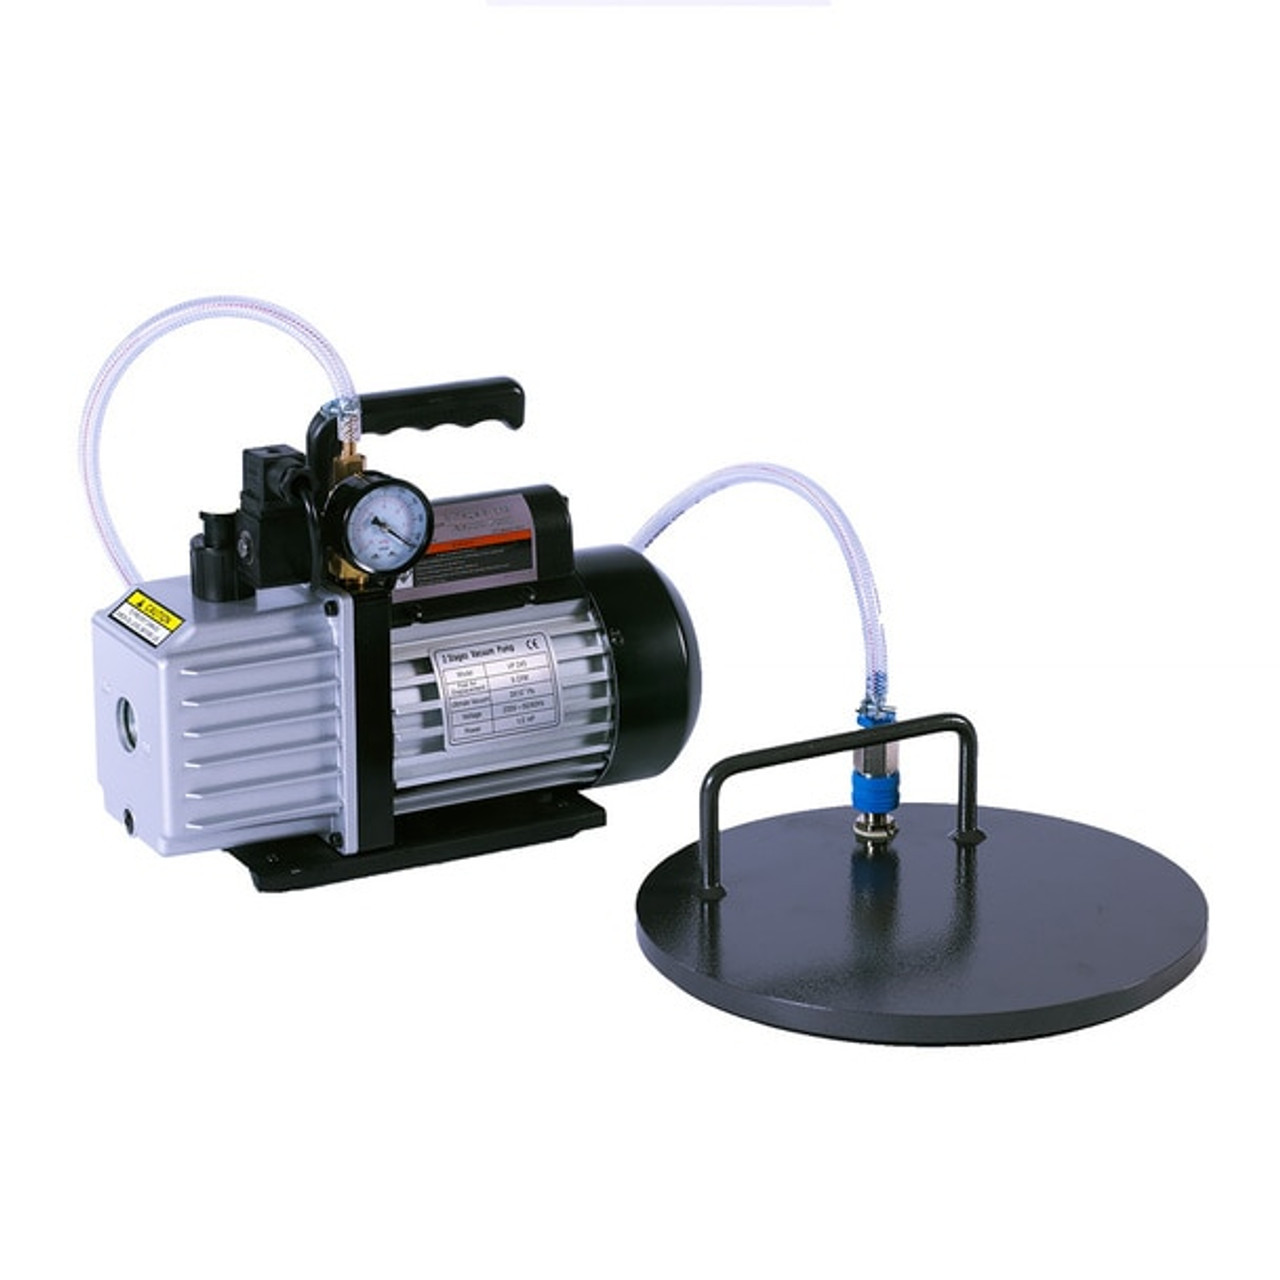 Euroboor Vacuum Adapter Kit (Round) 11 13/16", includes pump. VAC.810 (110V)